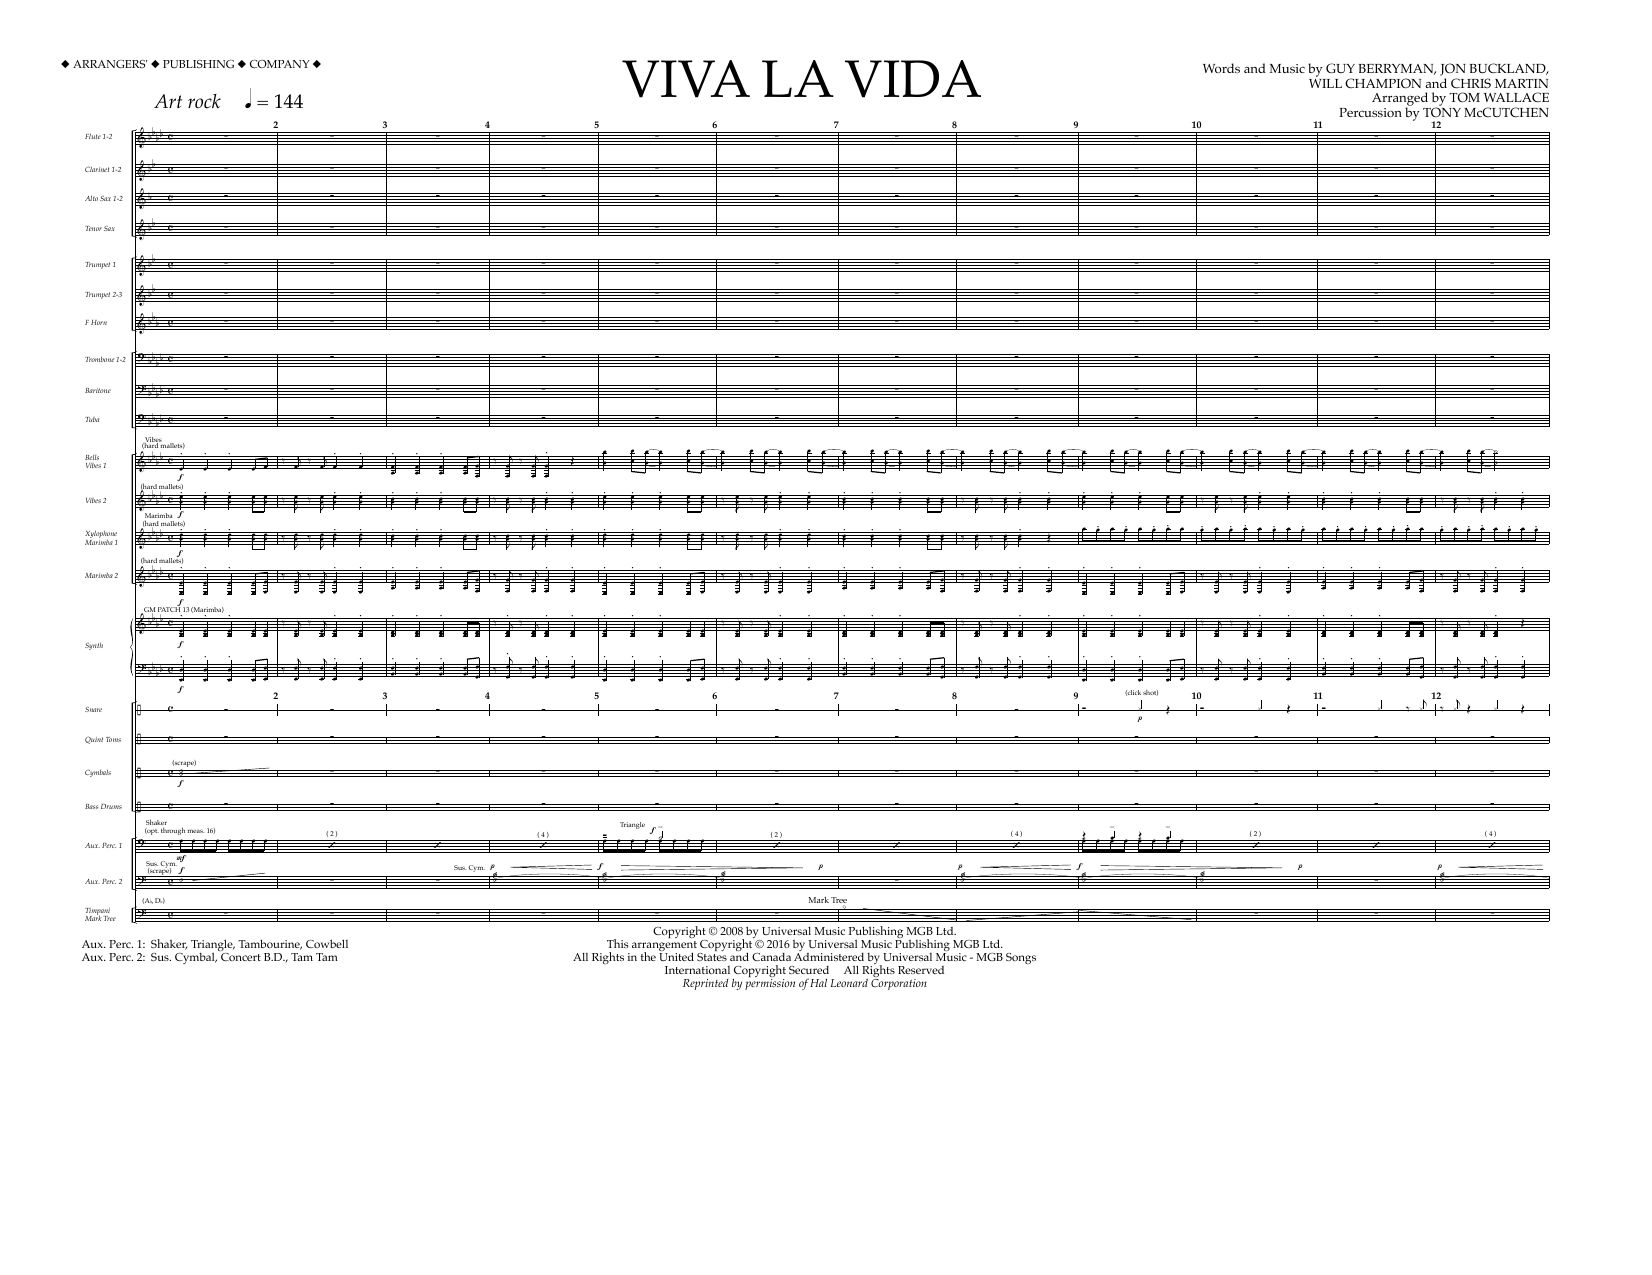 Tom Wallace Viva La Vida - Full Score Sheet Music Notes & Chords for Marching Band - Download or Print PDF